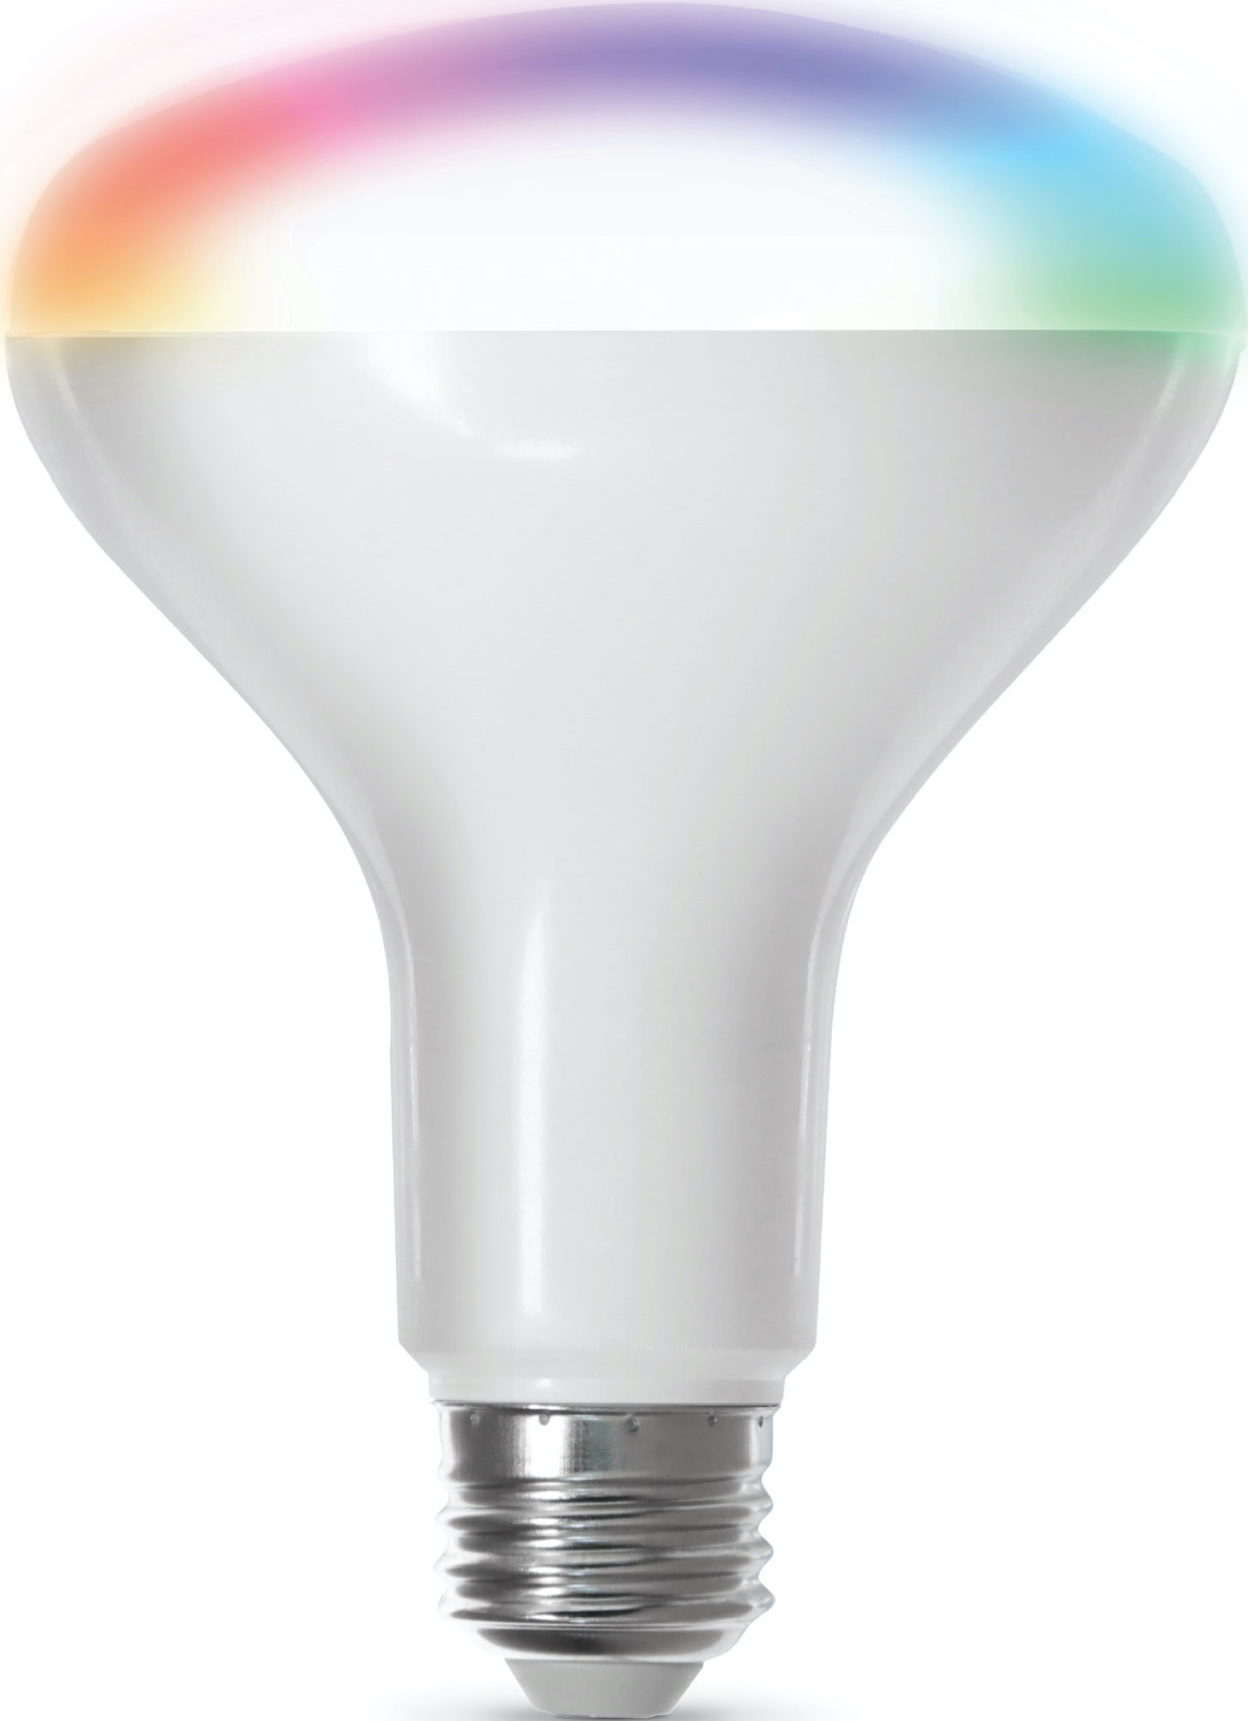 Feit Electric Br30 Multicolor Smart Light Bulb